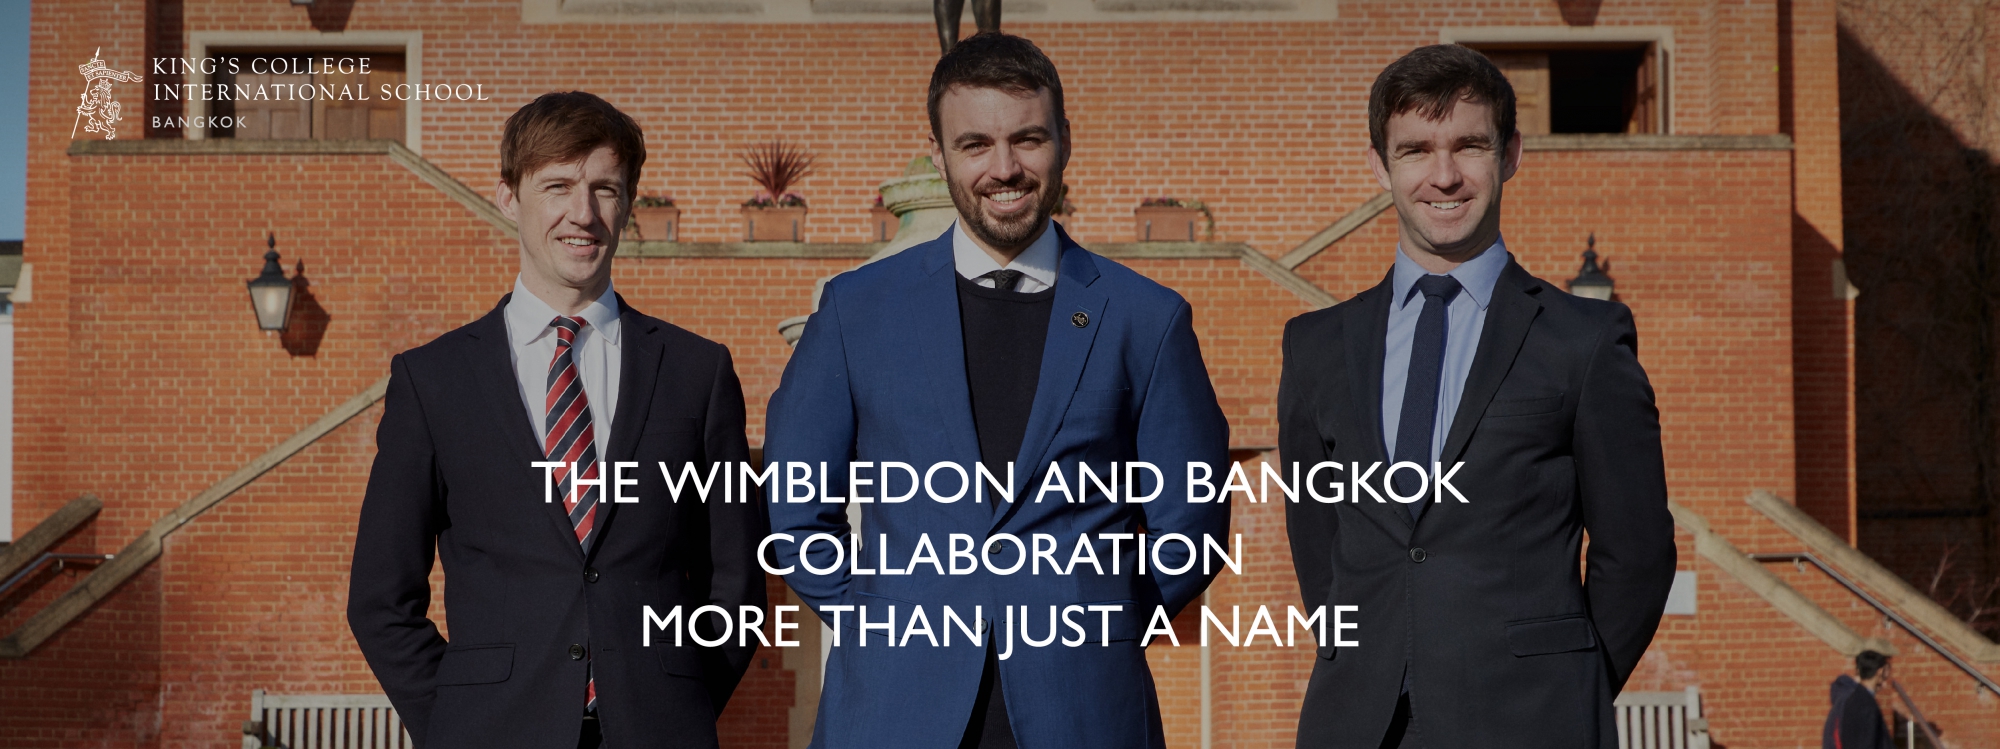 The Wimbledon and Bangkok Collaboration 